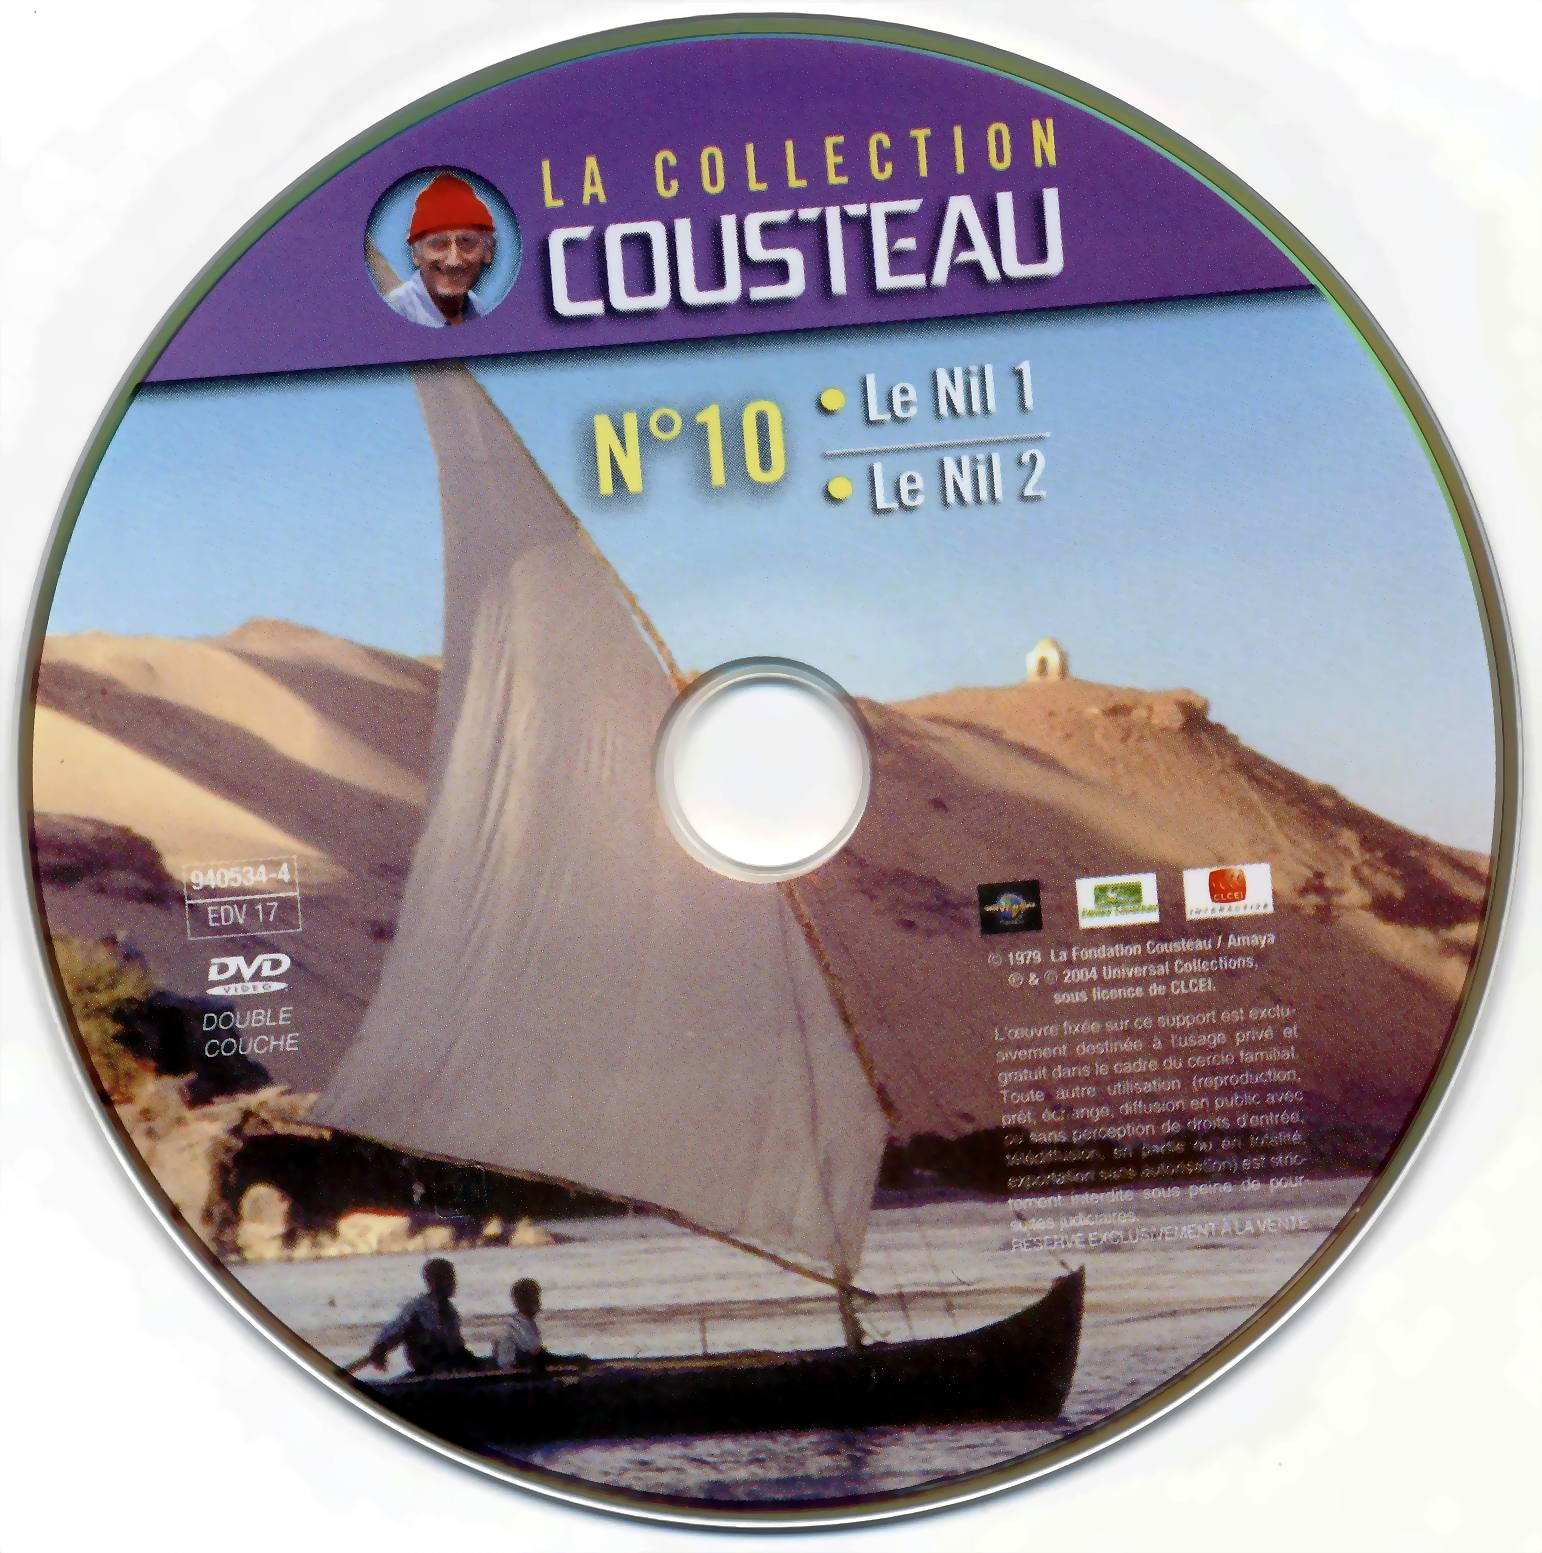 Cousteau Collection vol 10